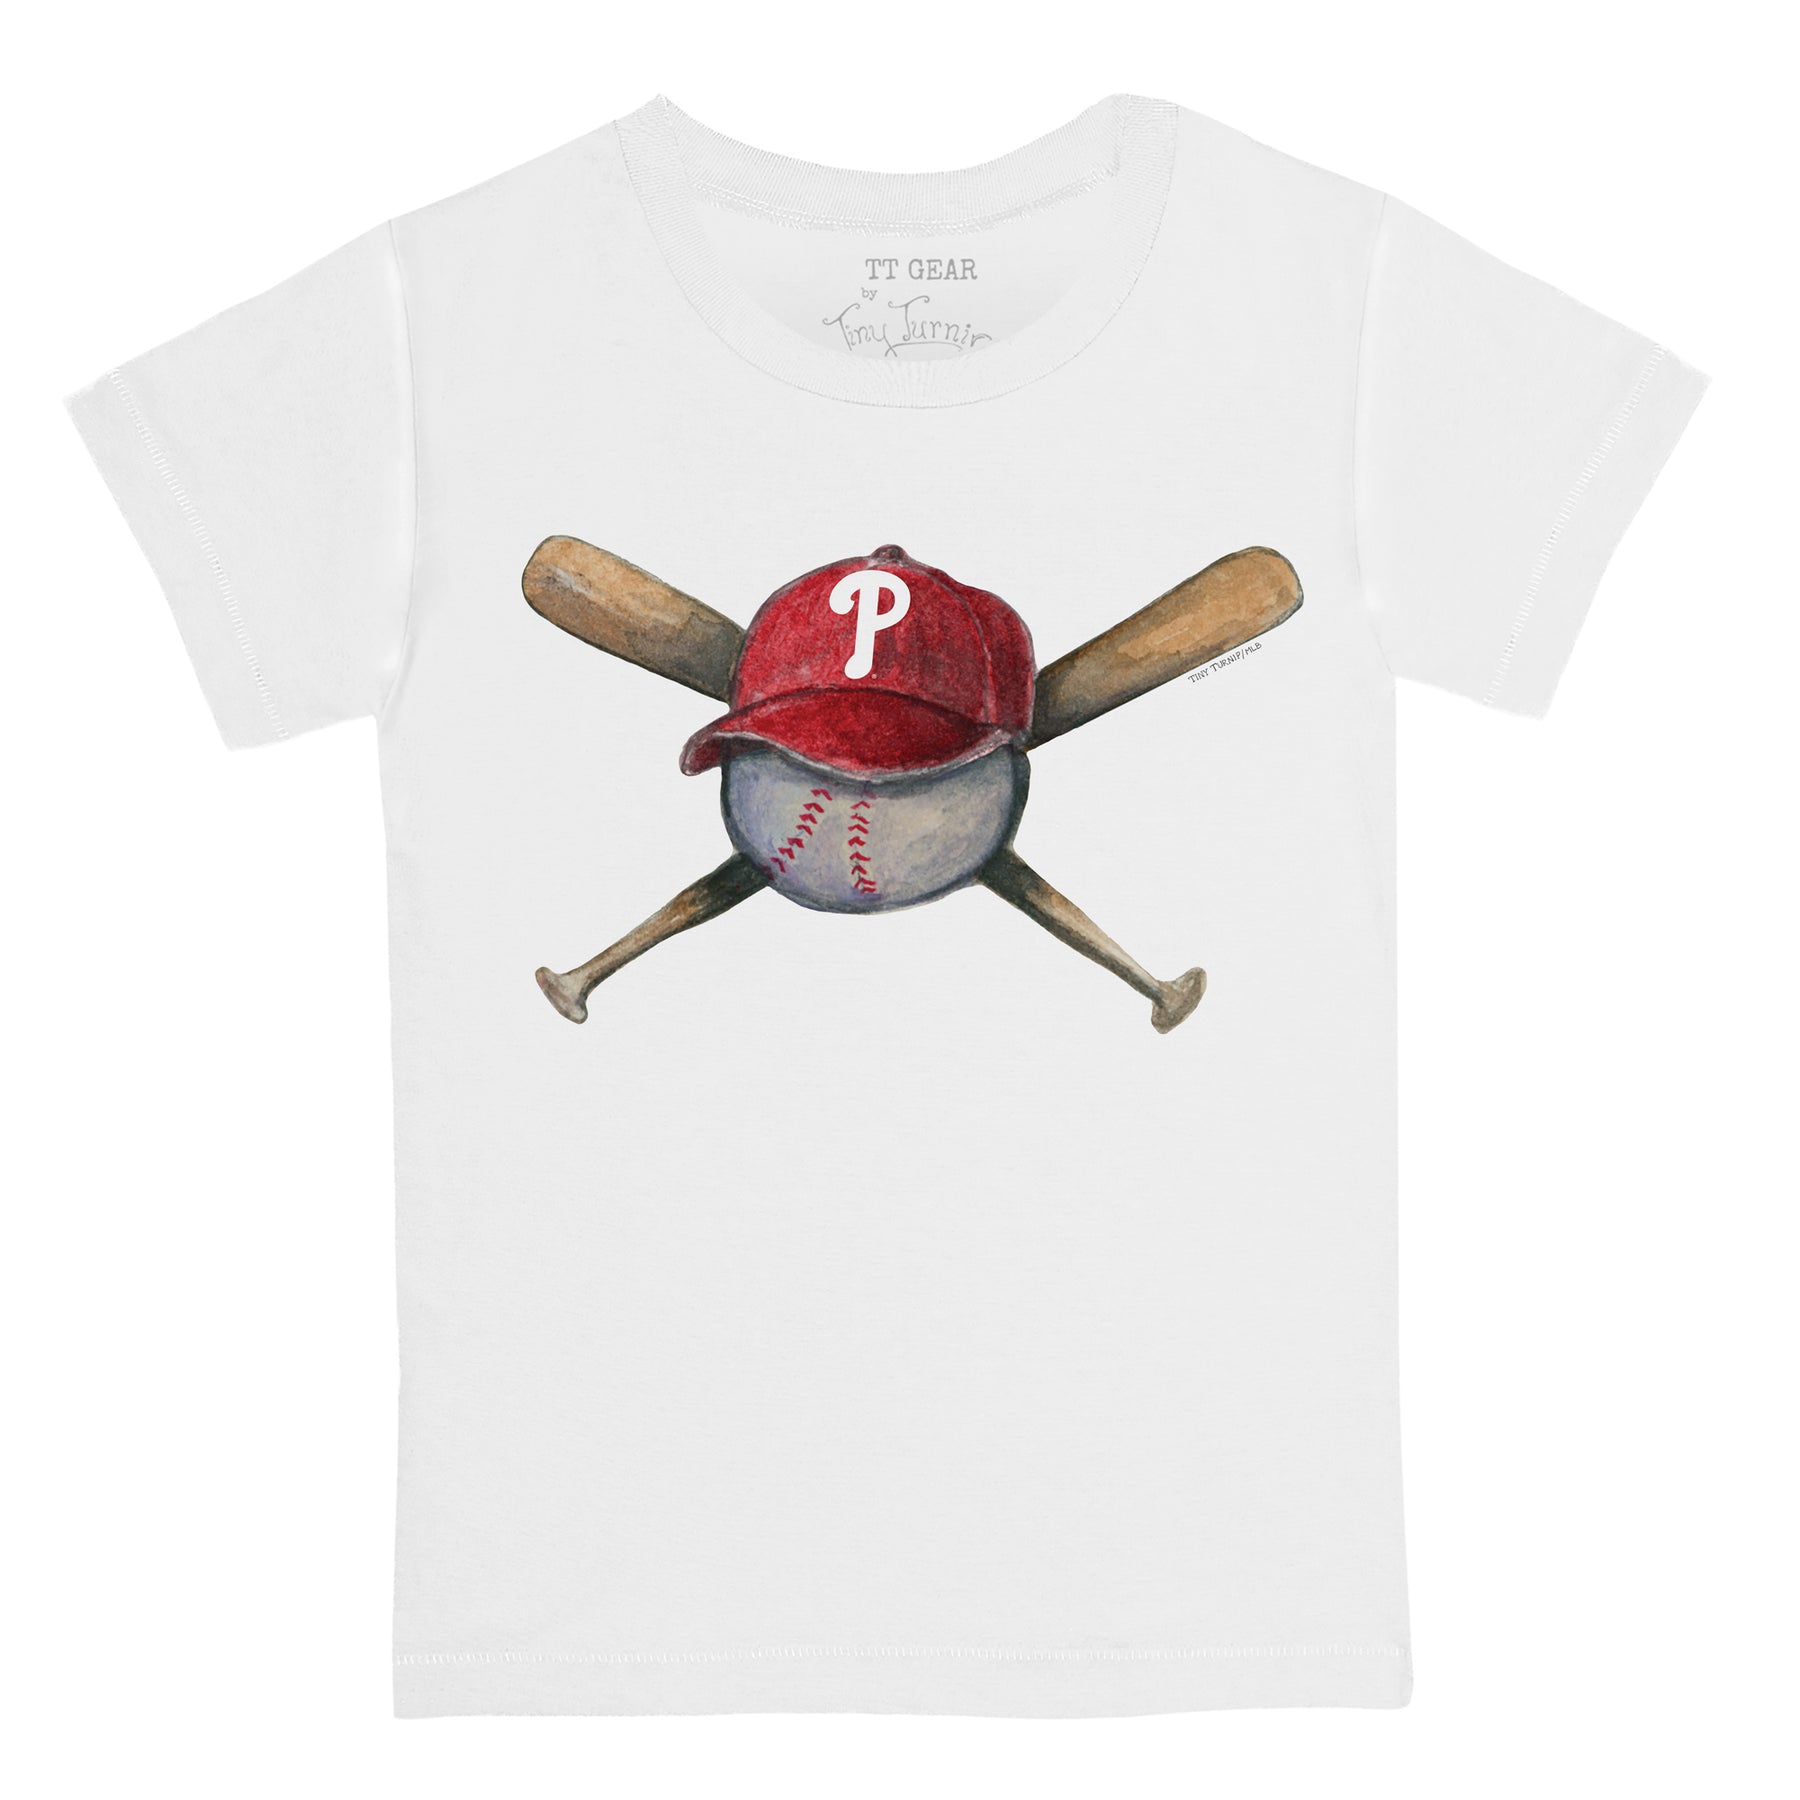 Tiny Turnip Philadelphia Phillies Stitched Baseball Tee Shirt Youth Large (10-12) / Red